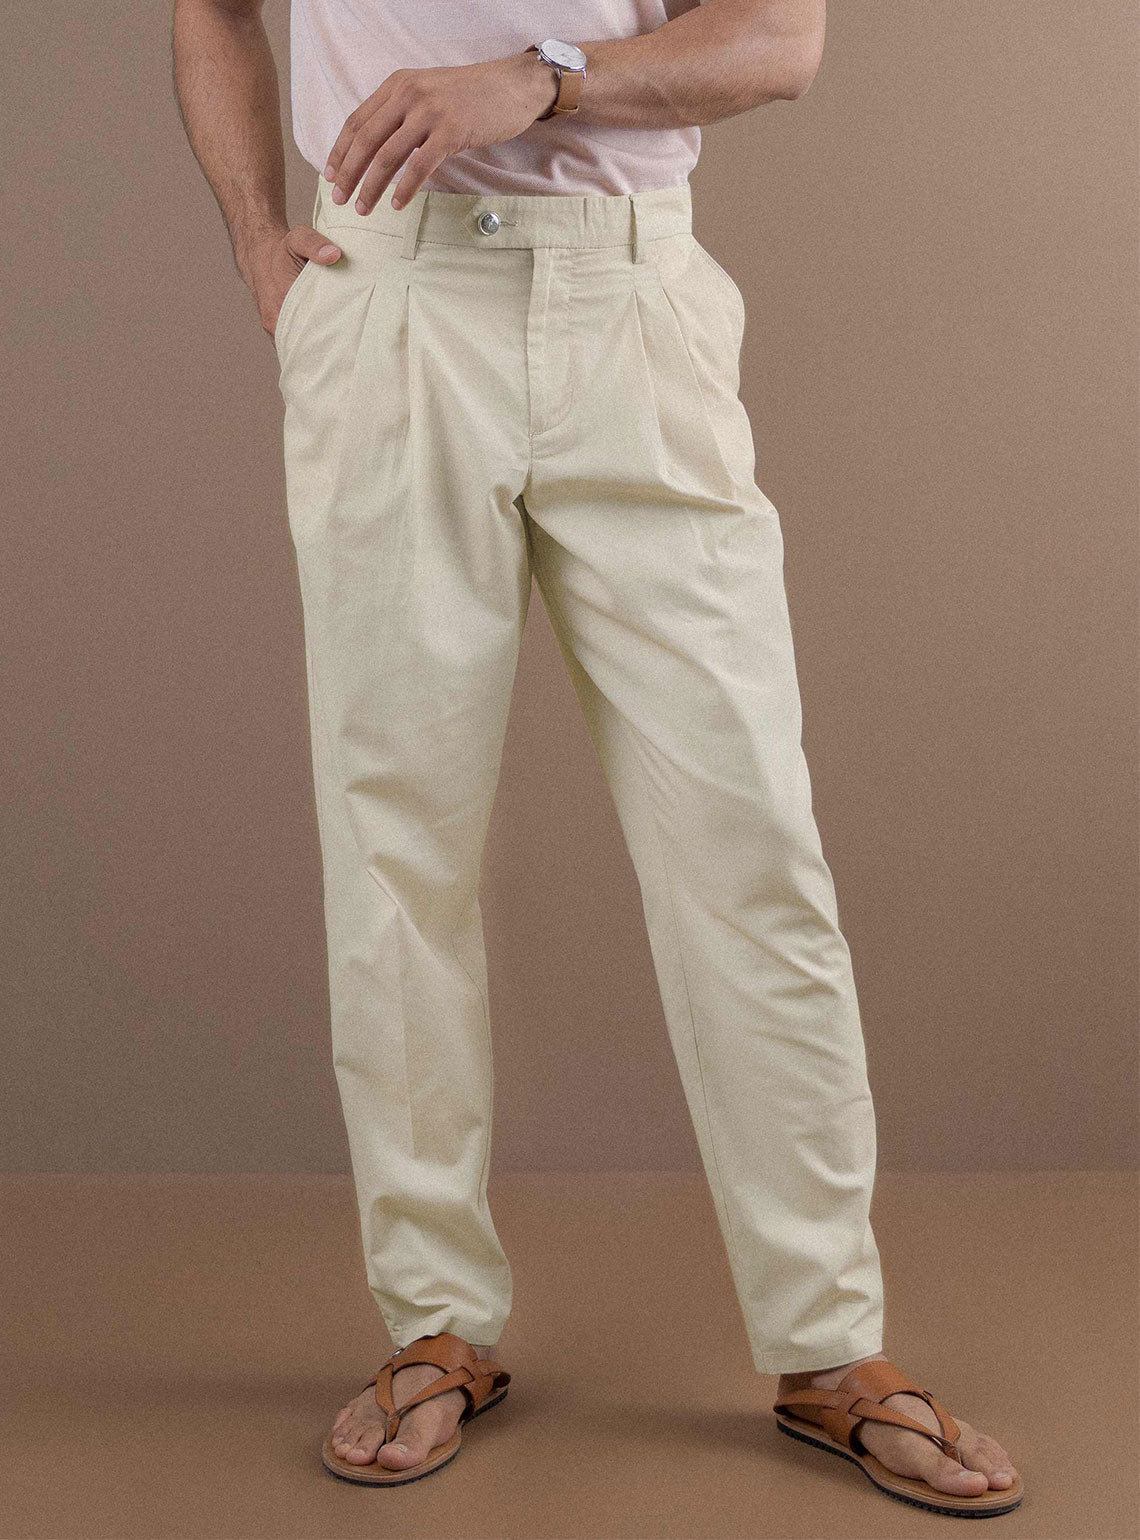 Hemp Pants 100% Hemp Drawstring Trousers Mens Clothing | eBay